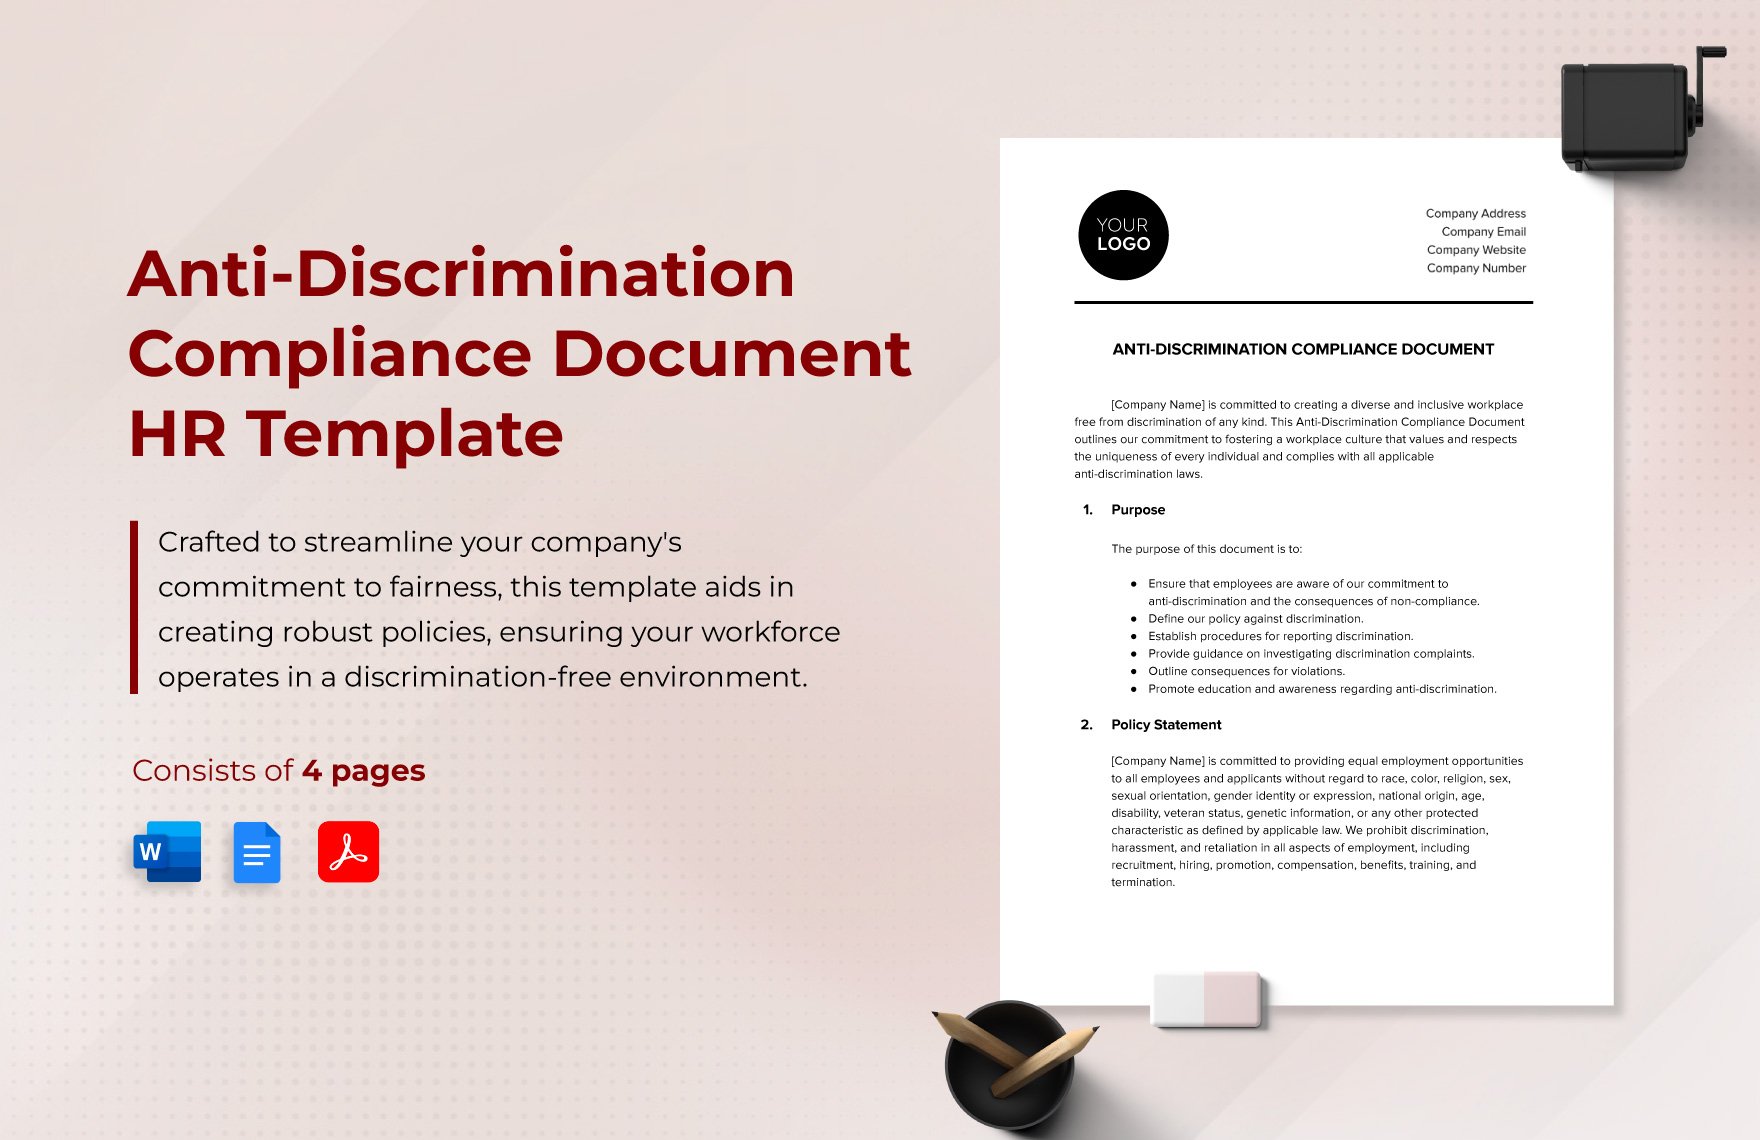 Anti-Discrimination Compliance Document HR Template